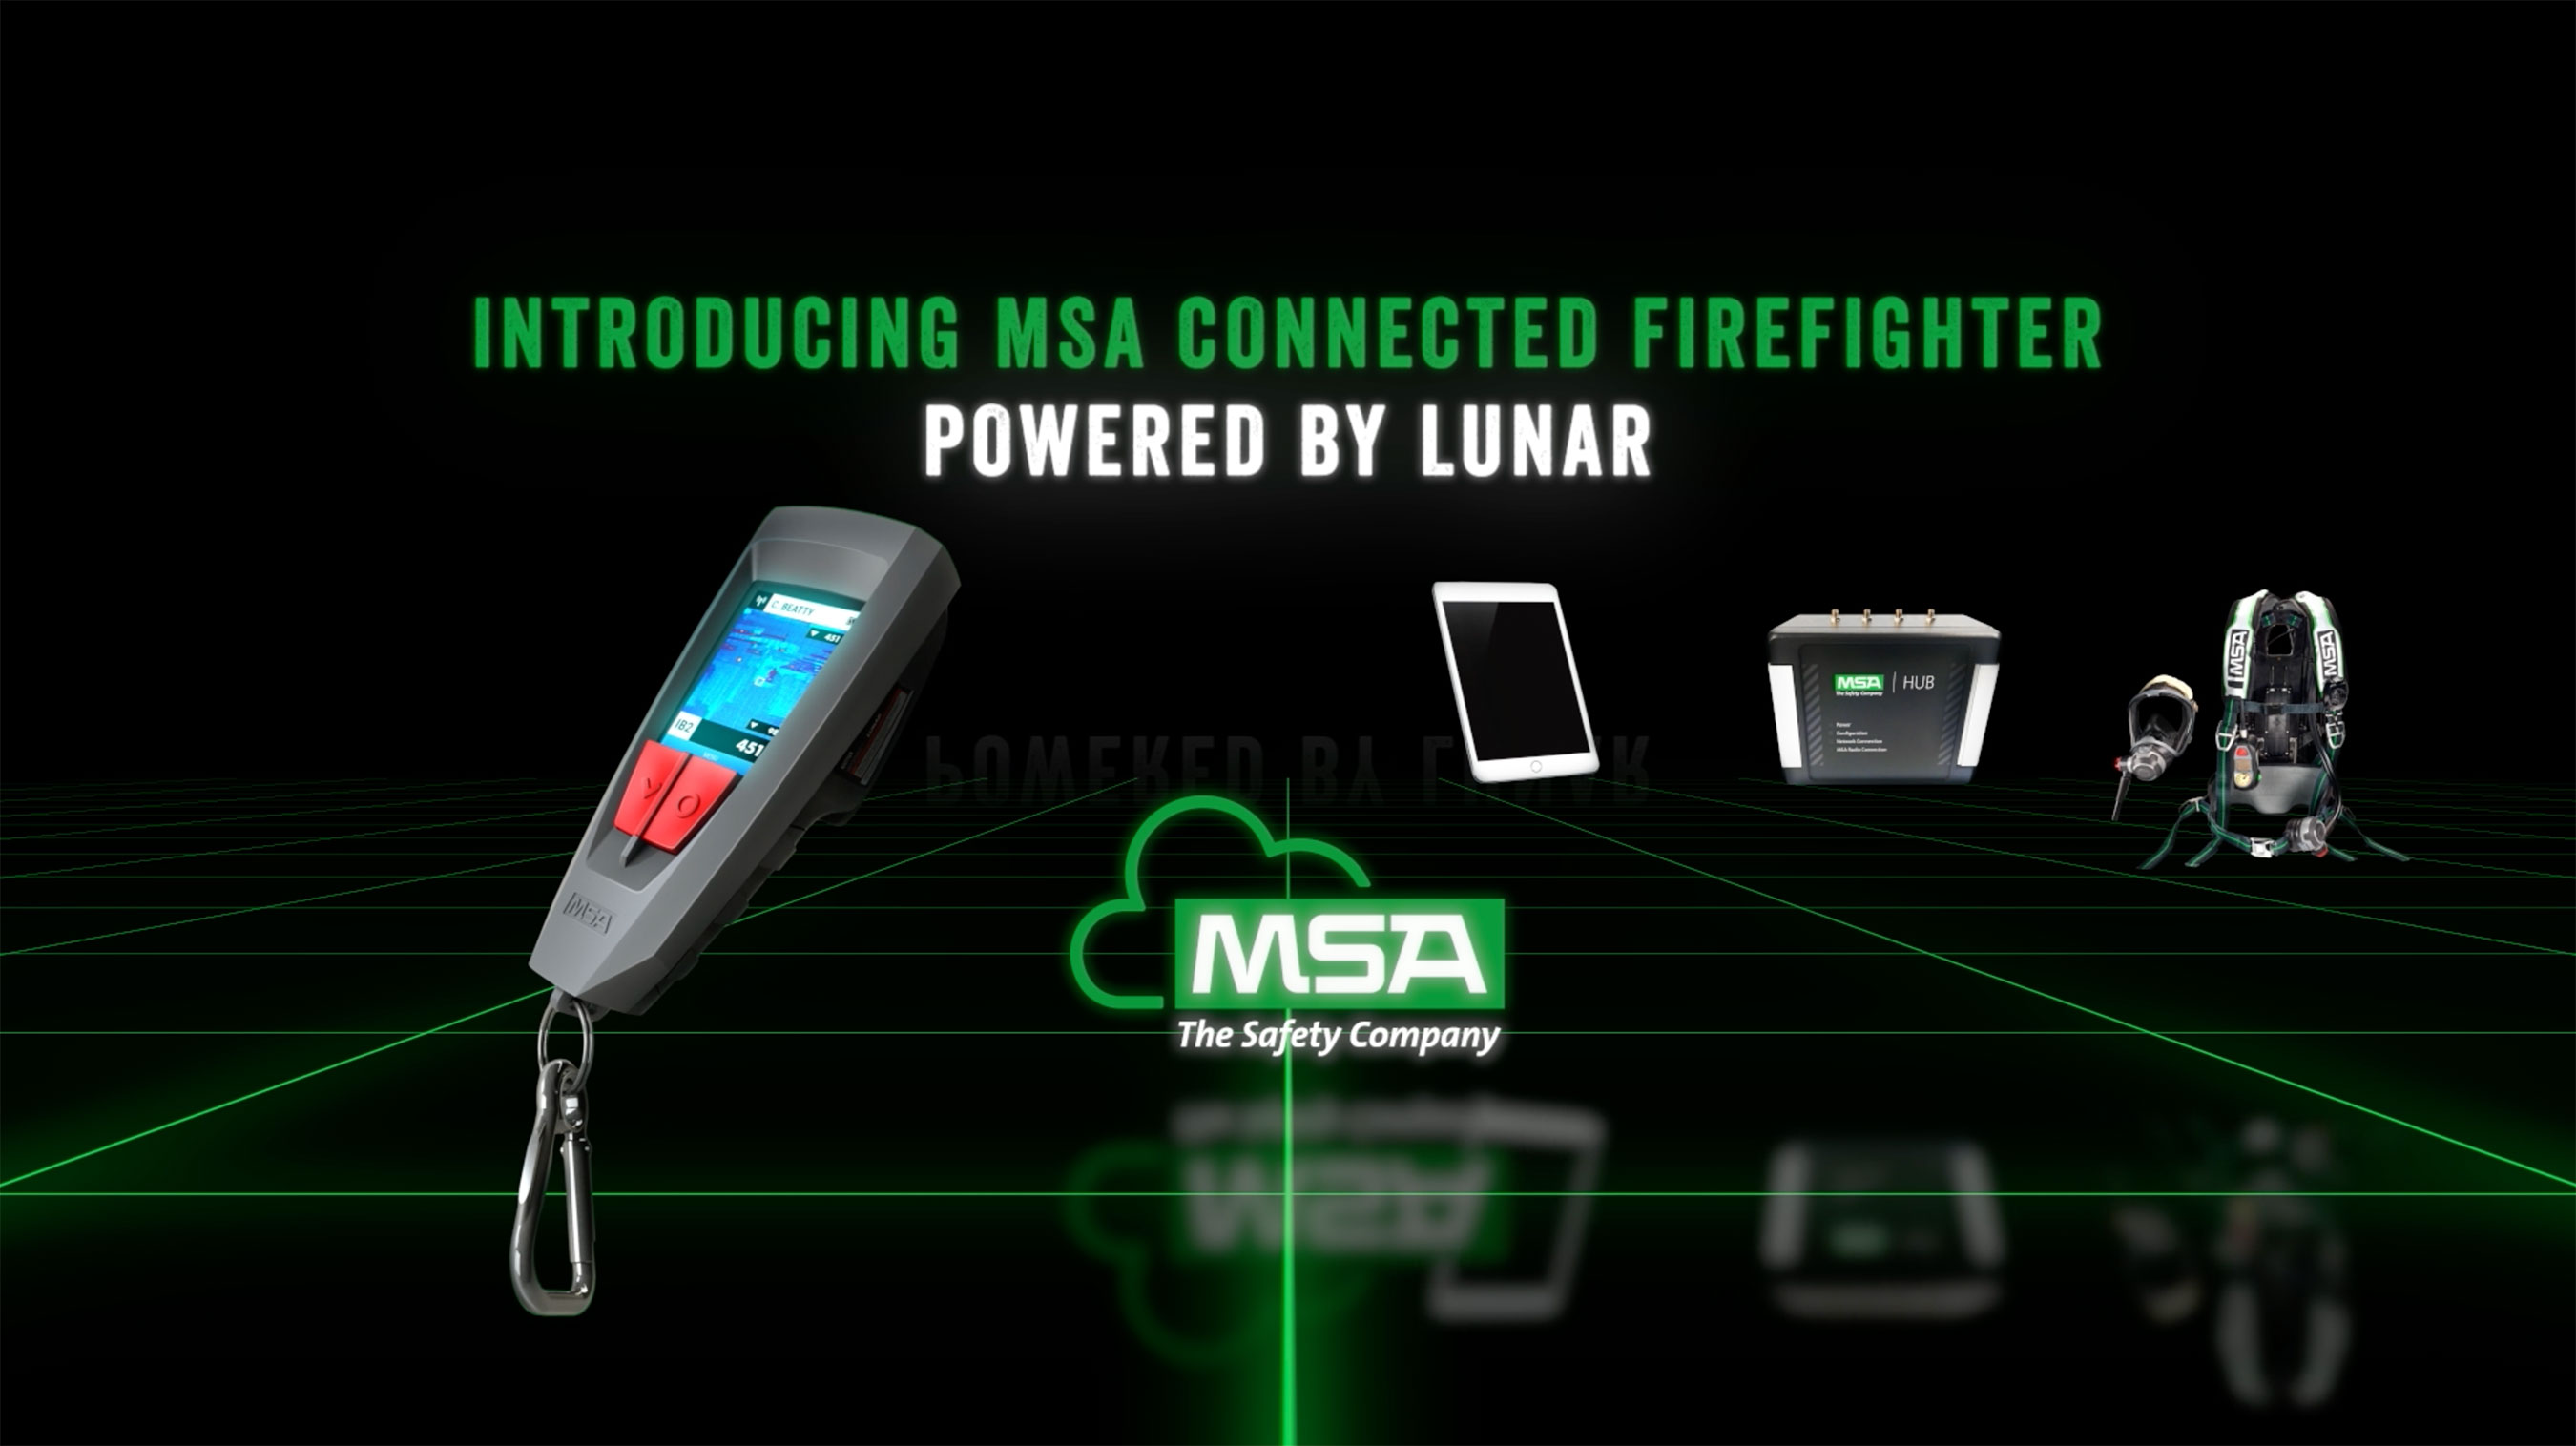 MSA Connected Firefighter Platform